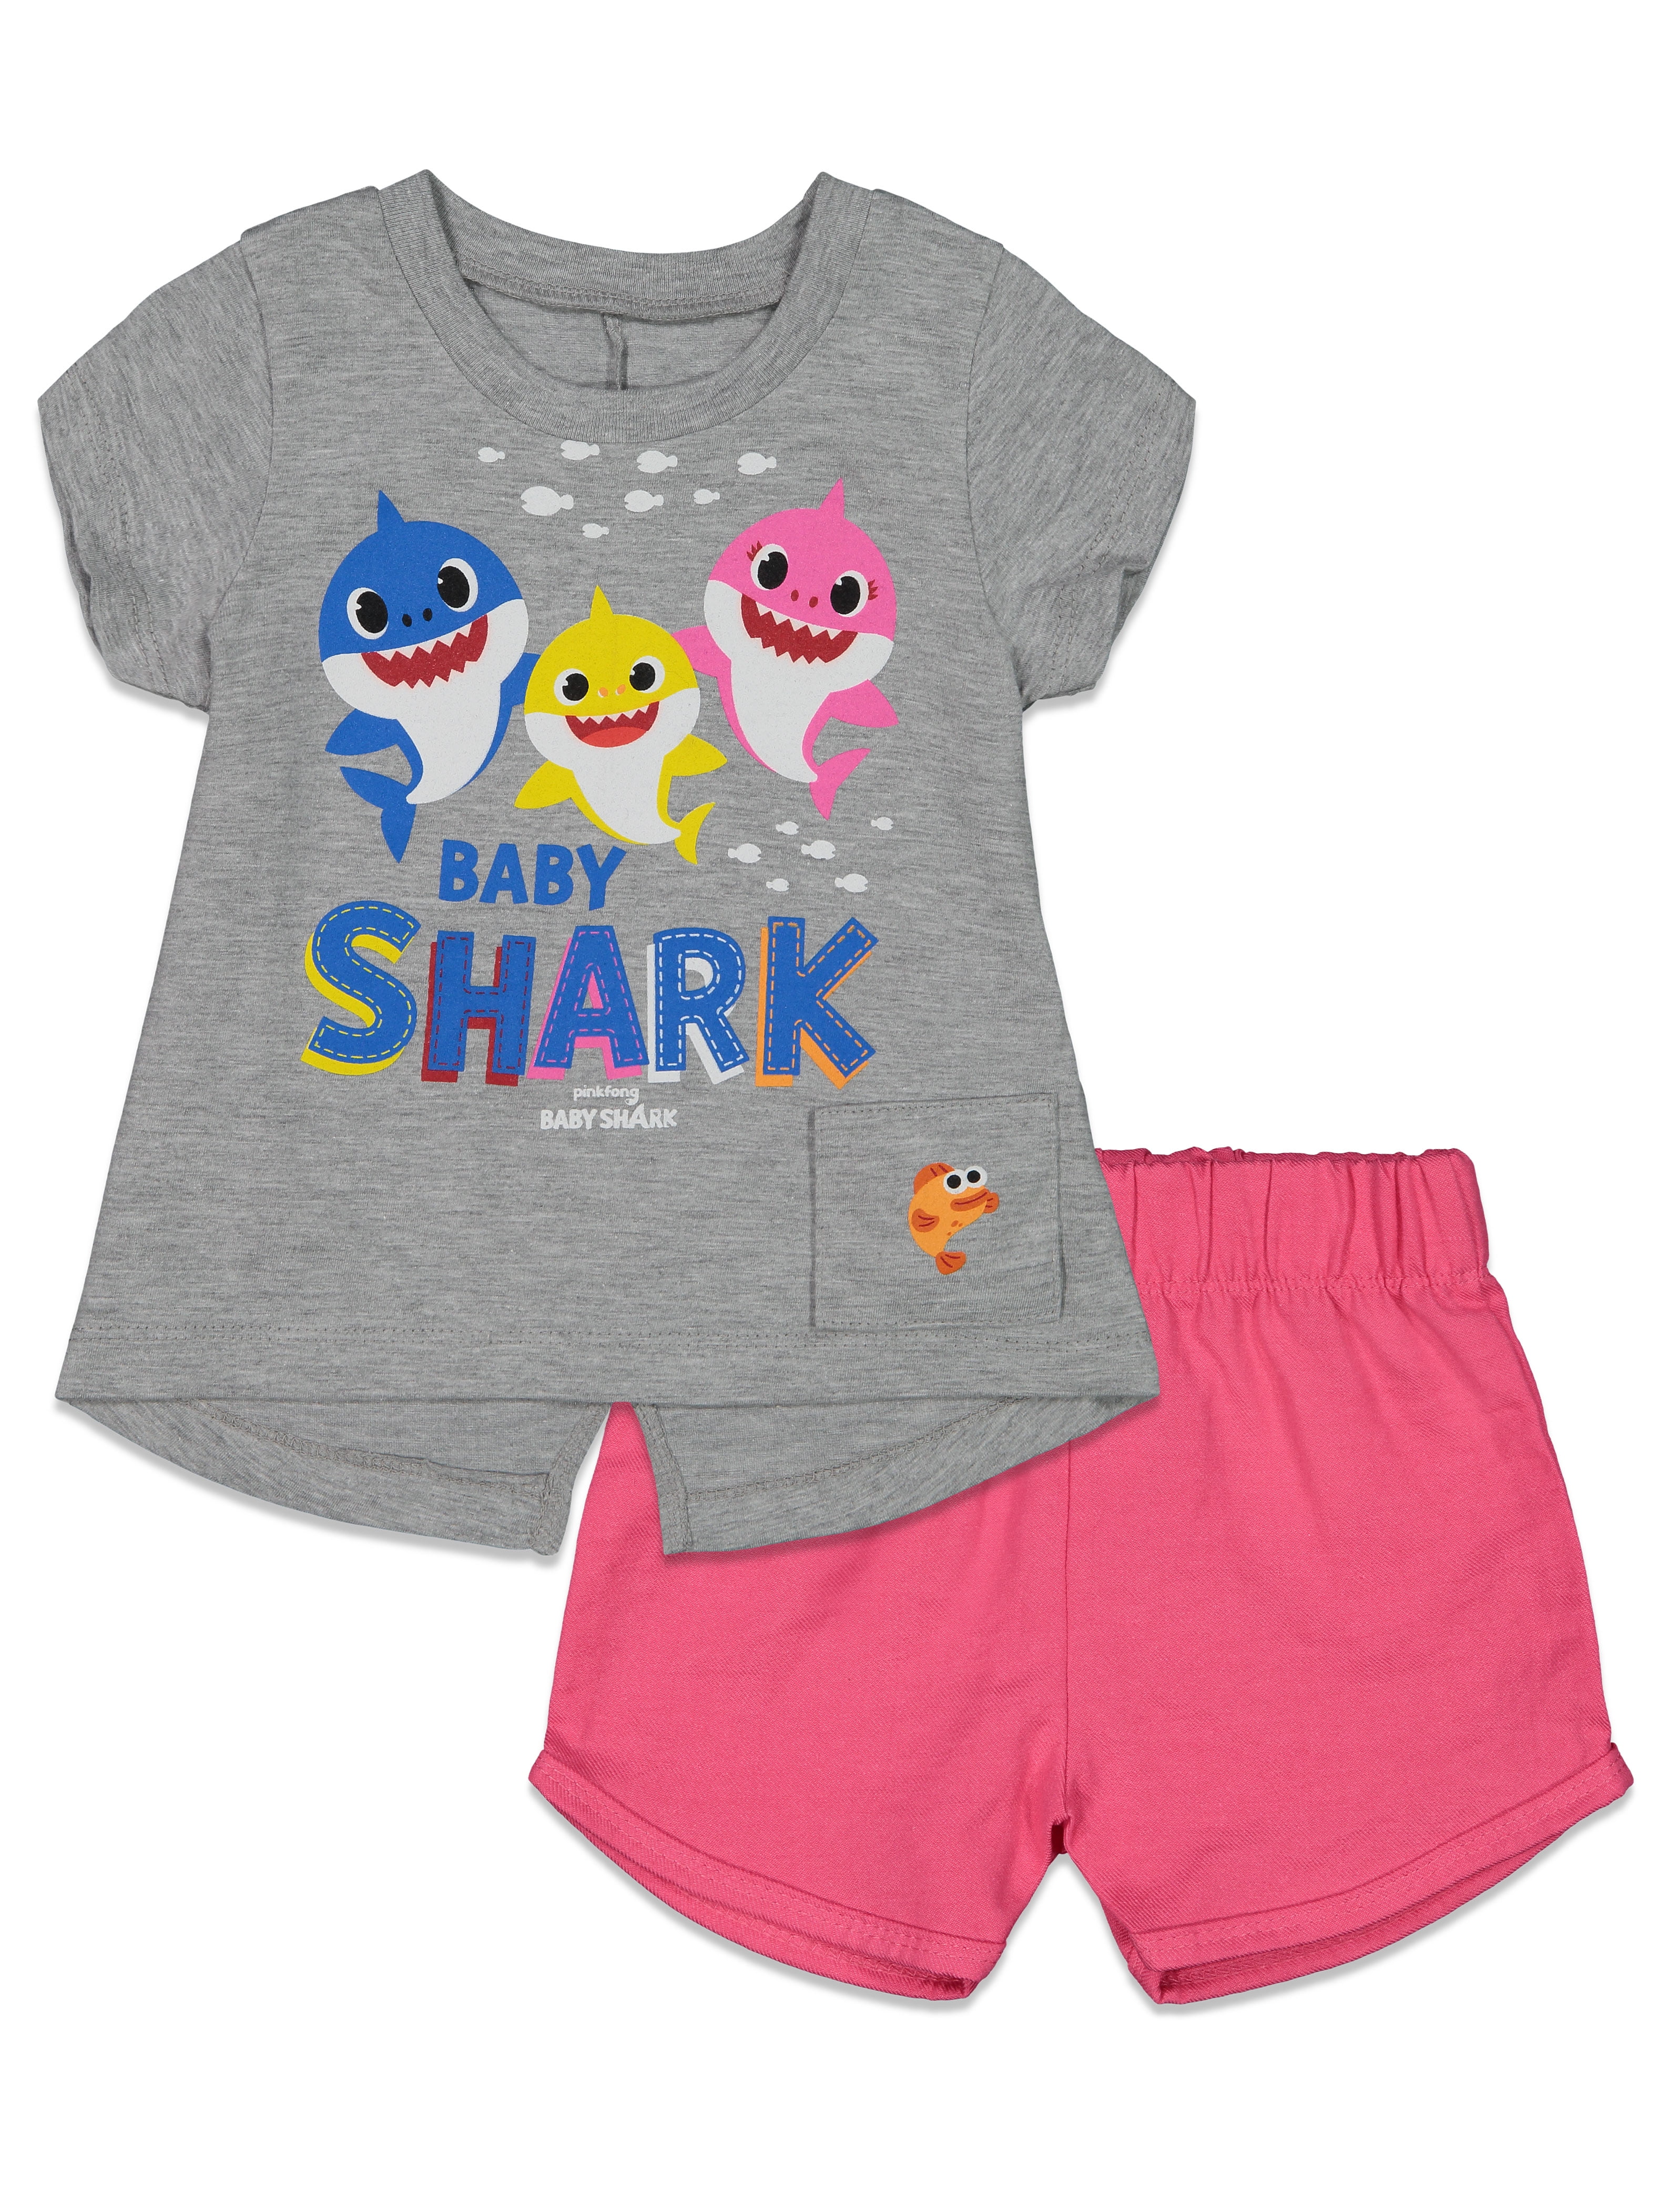 Kleding Unisex kinderkleding Tops & T-shirts T-shirts T-shirts met print Baby Shark inspired Outfit 